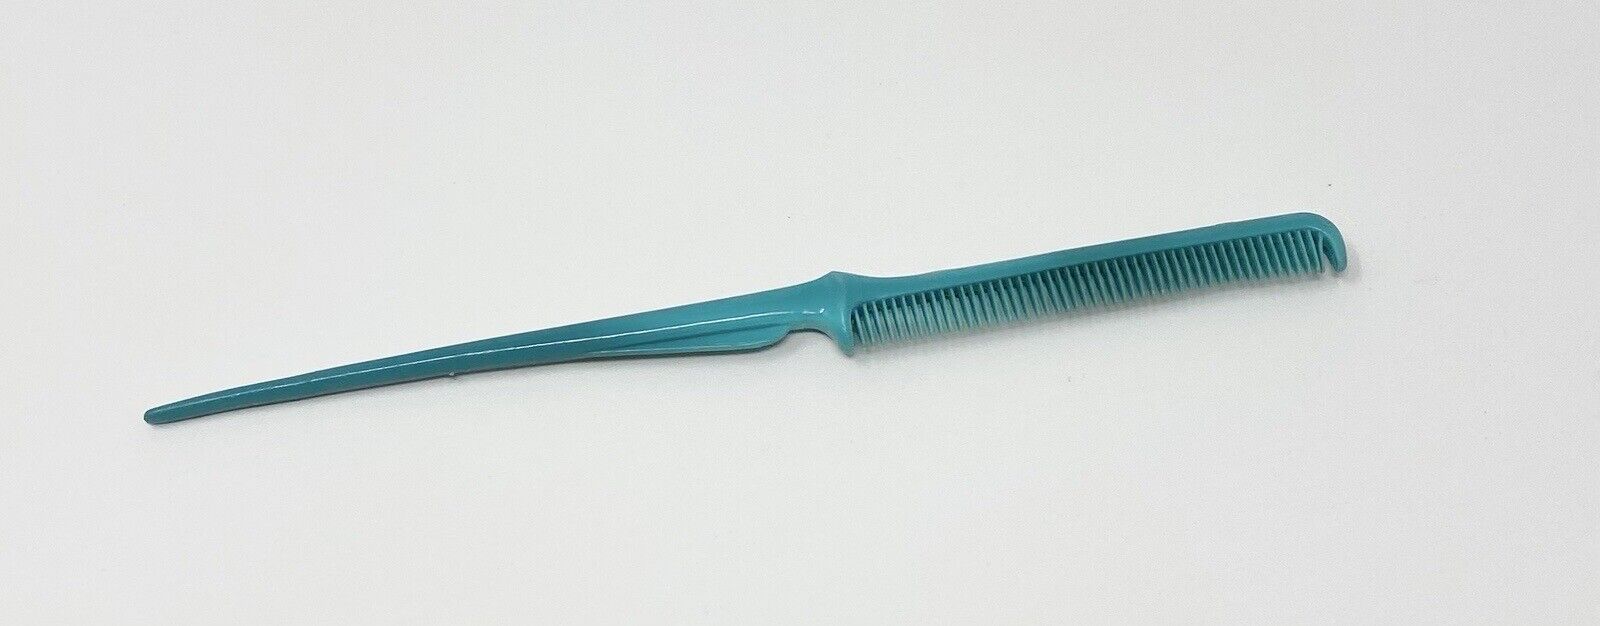 Vintage Hair Comb Teaser Thin Narrow Small Teeth Rare Unique Blue 80s Retro